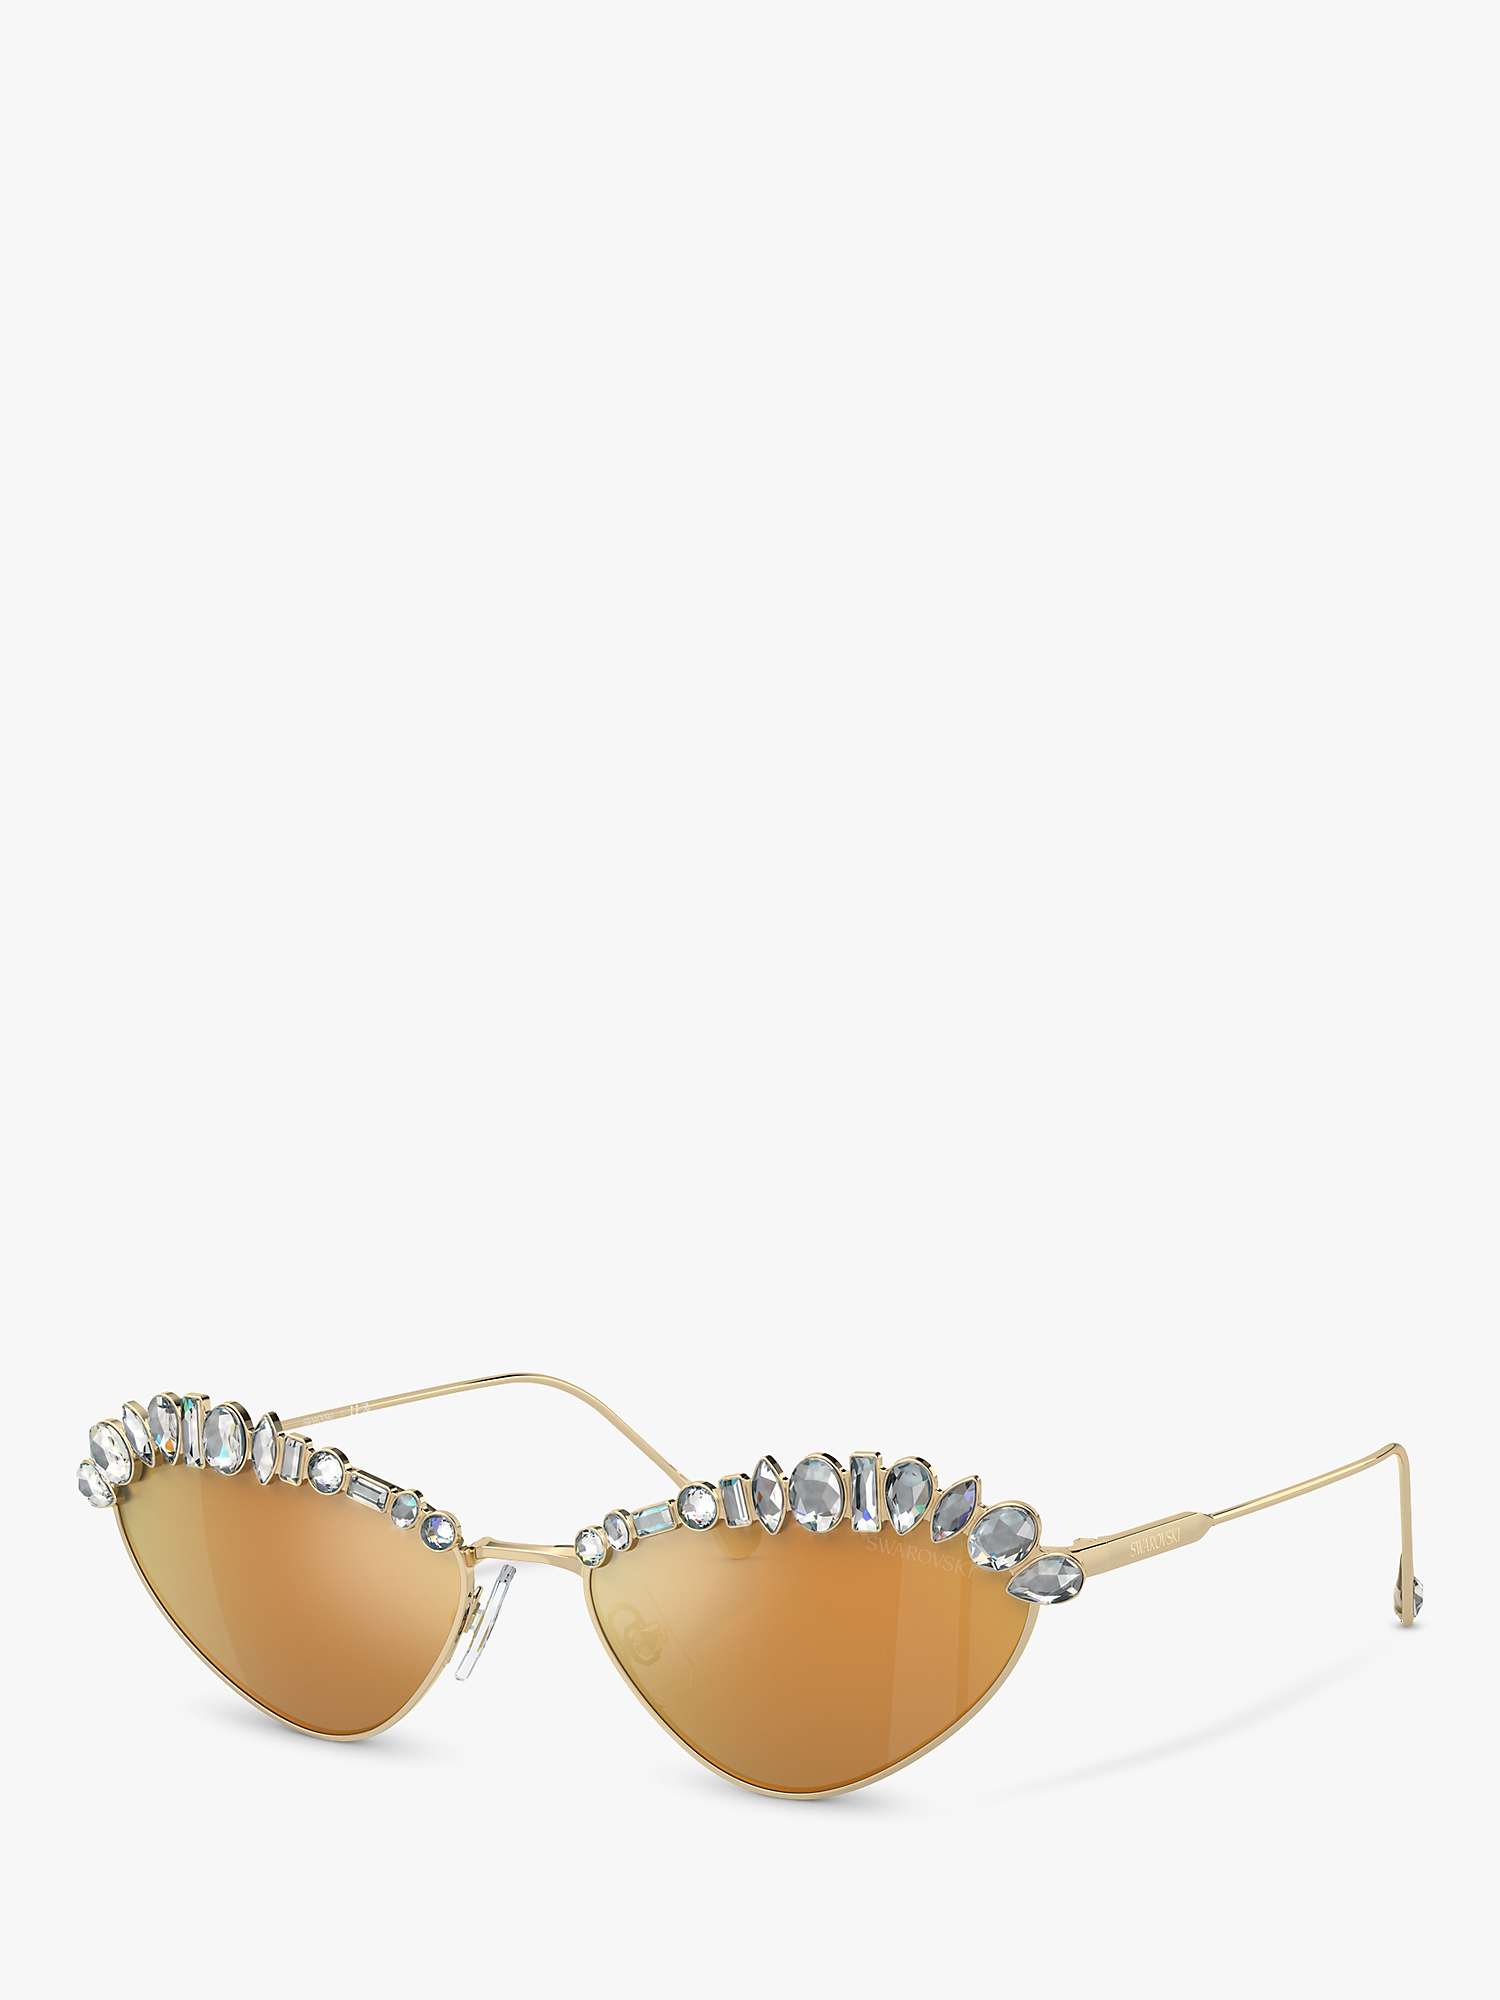 Buy Swarovski SK7009 Women's Crystal Cat's Eye Sunglasses, Pale Gold/Mirror Orange Online at johnlewis.com